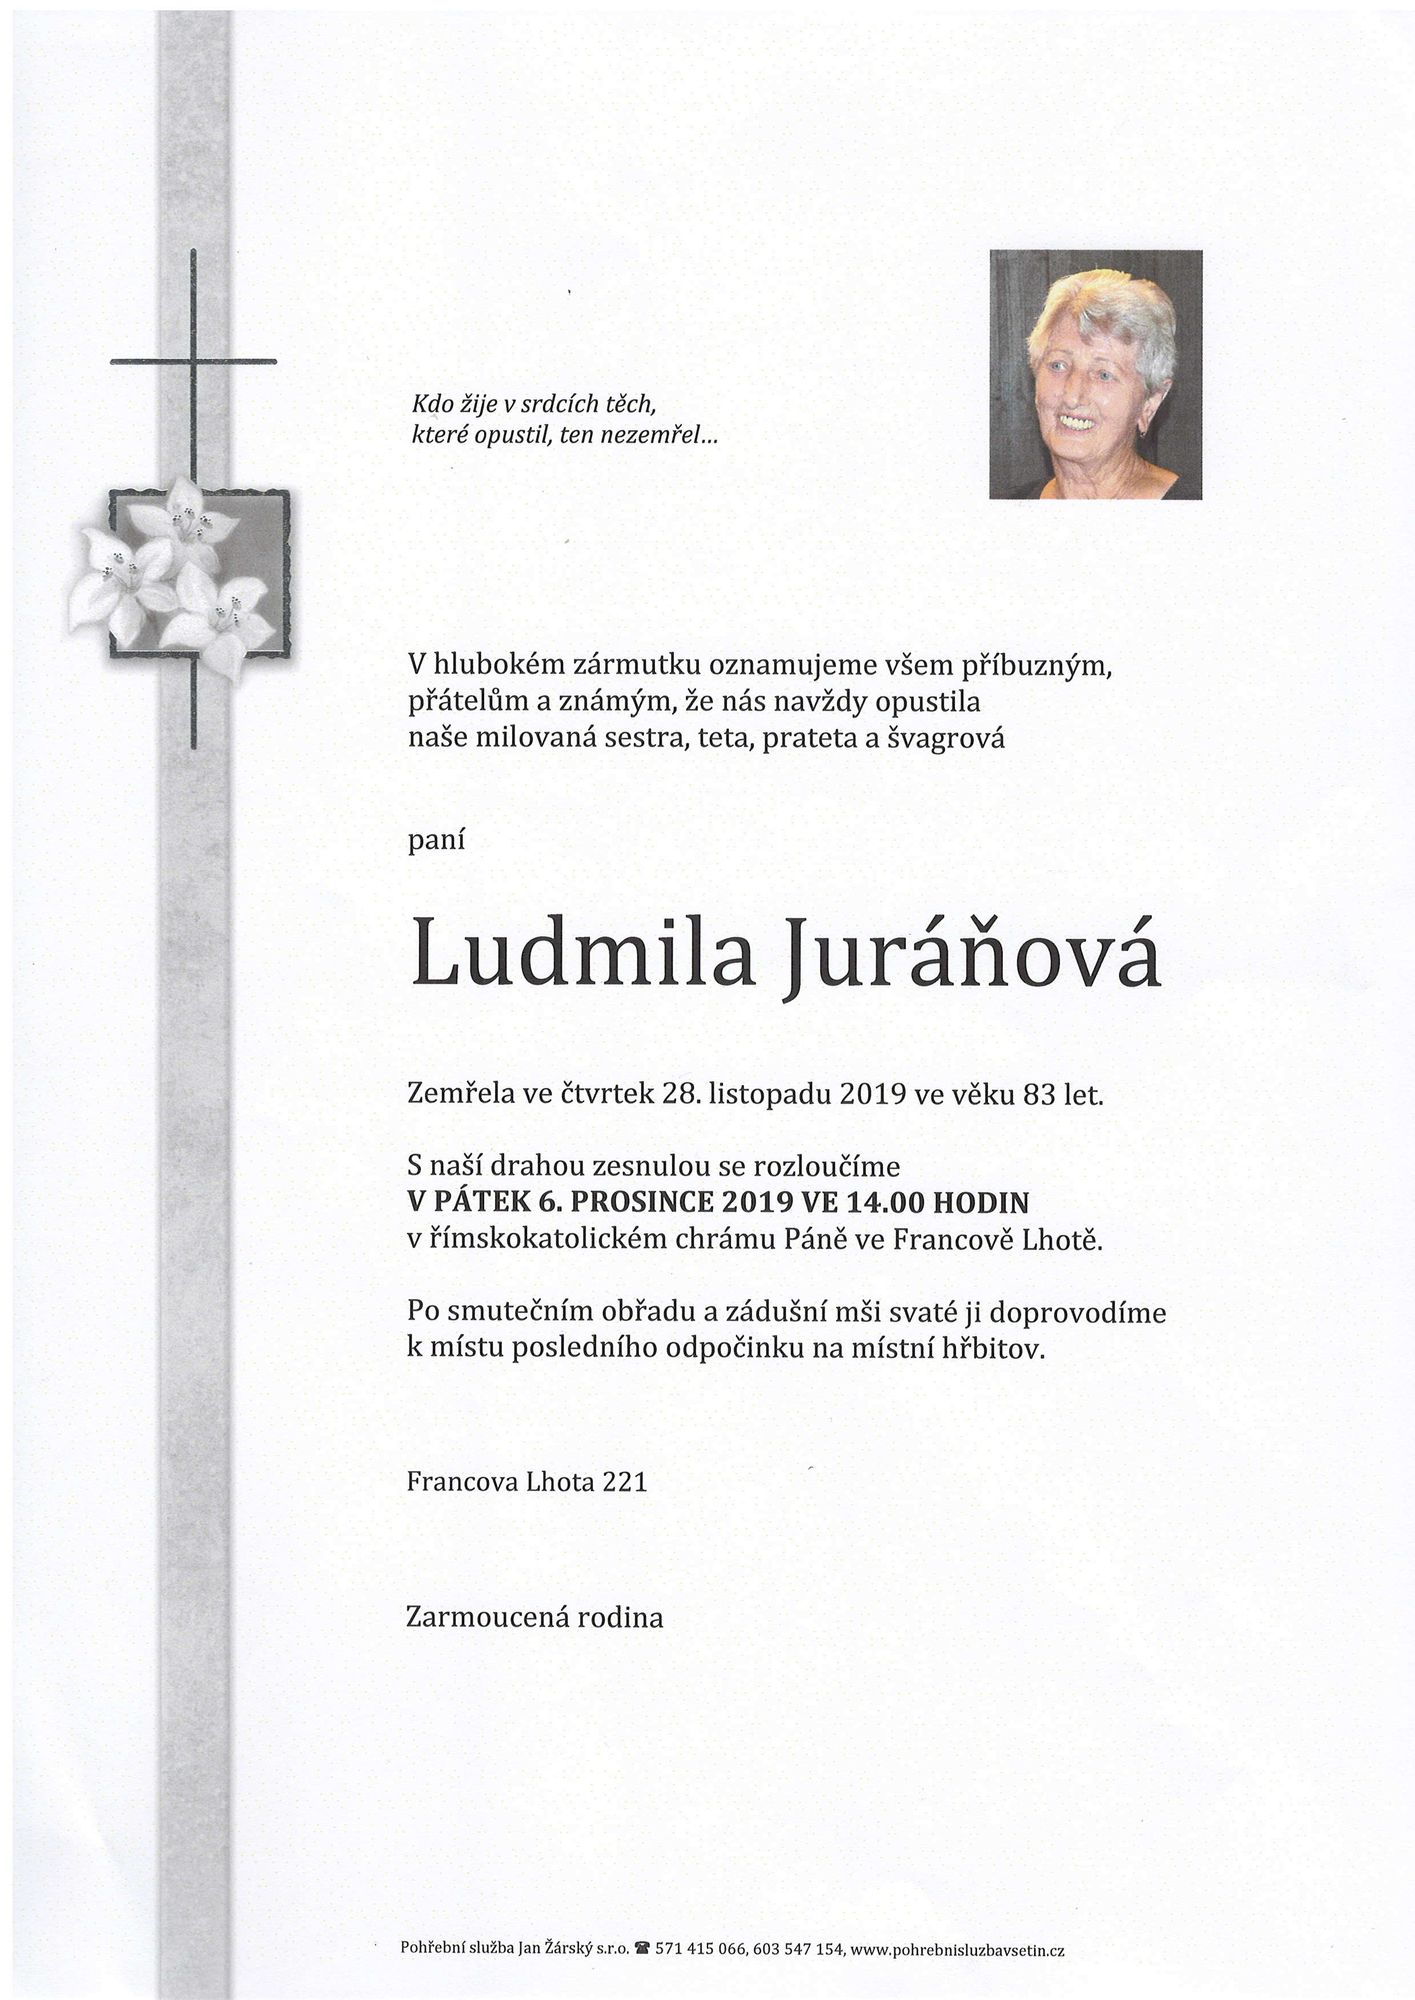 Ludmila Juráňová